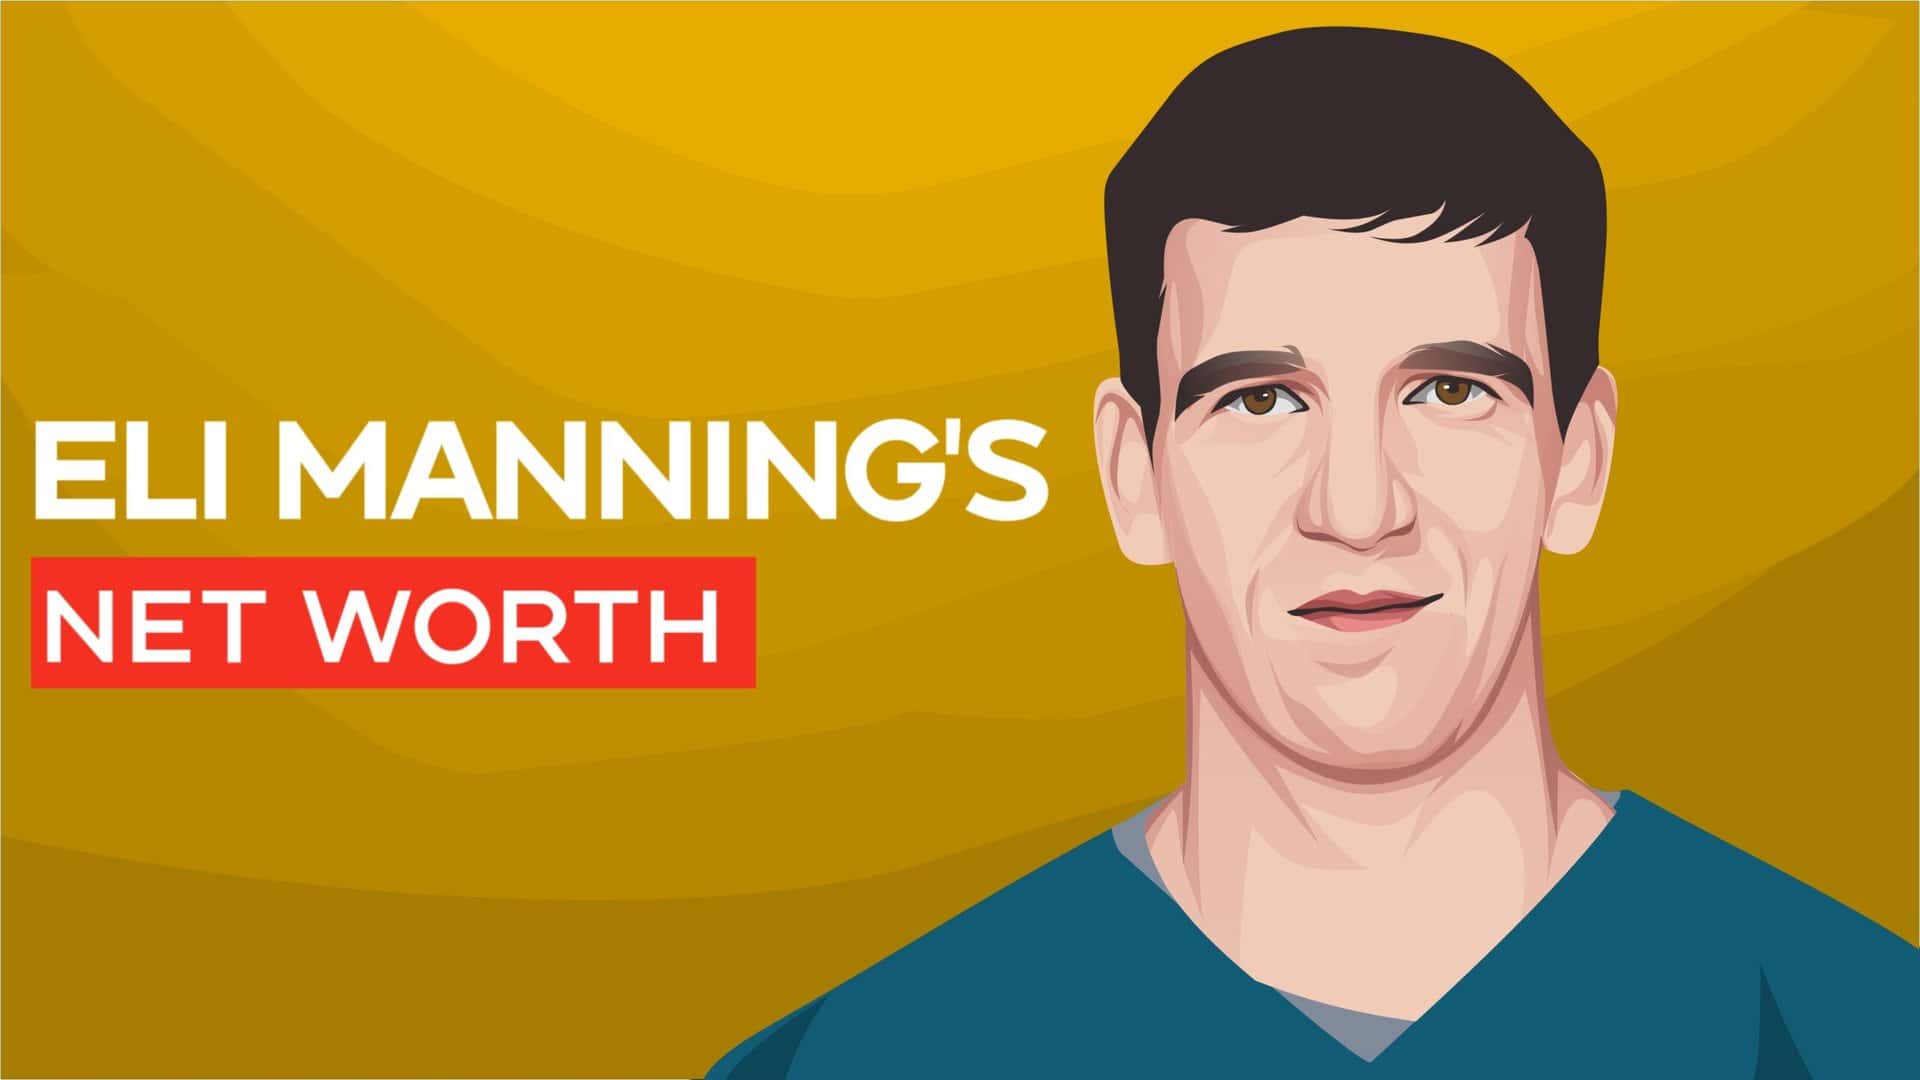 Eli Manning's Net Worth